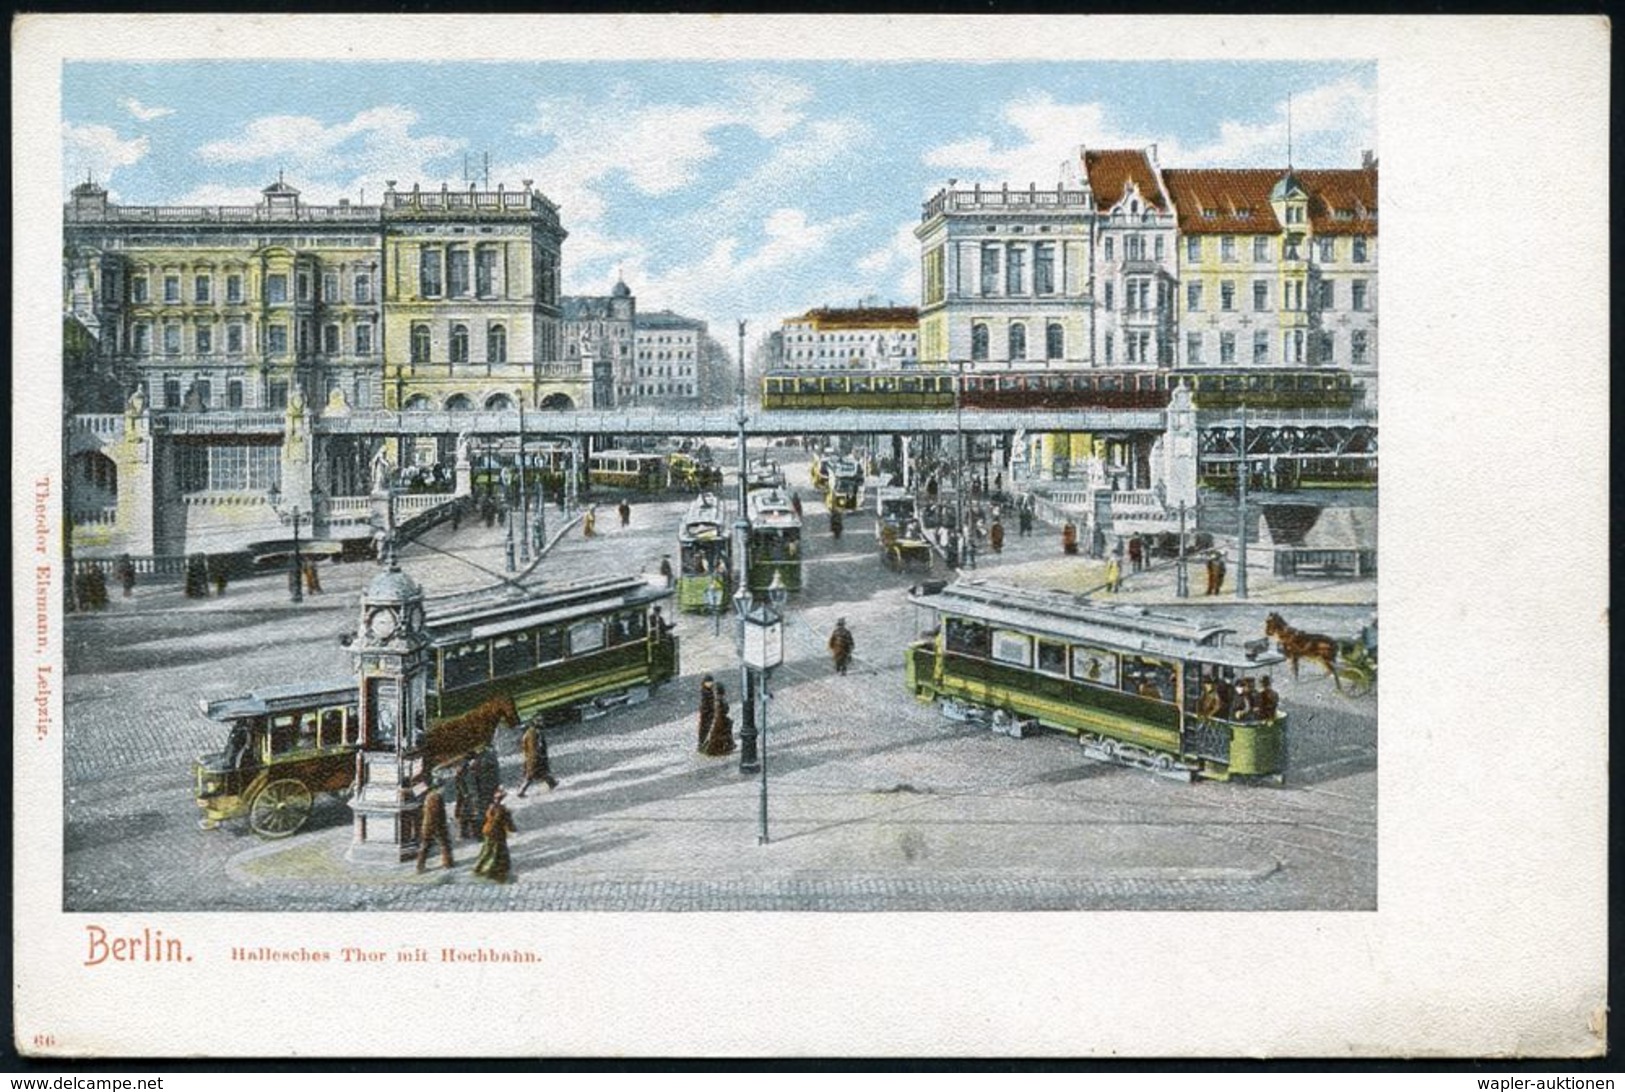 UNTERGRUNDBAHN /U-BAHN : Berlin-Kreuzberg 1905/15 U-Bahnhof Hallesches Tor, 10 Verschiedene Color-Foto-Ak. , Meist Gebr. - Treni